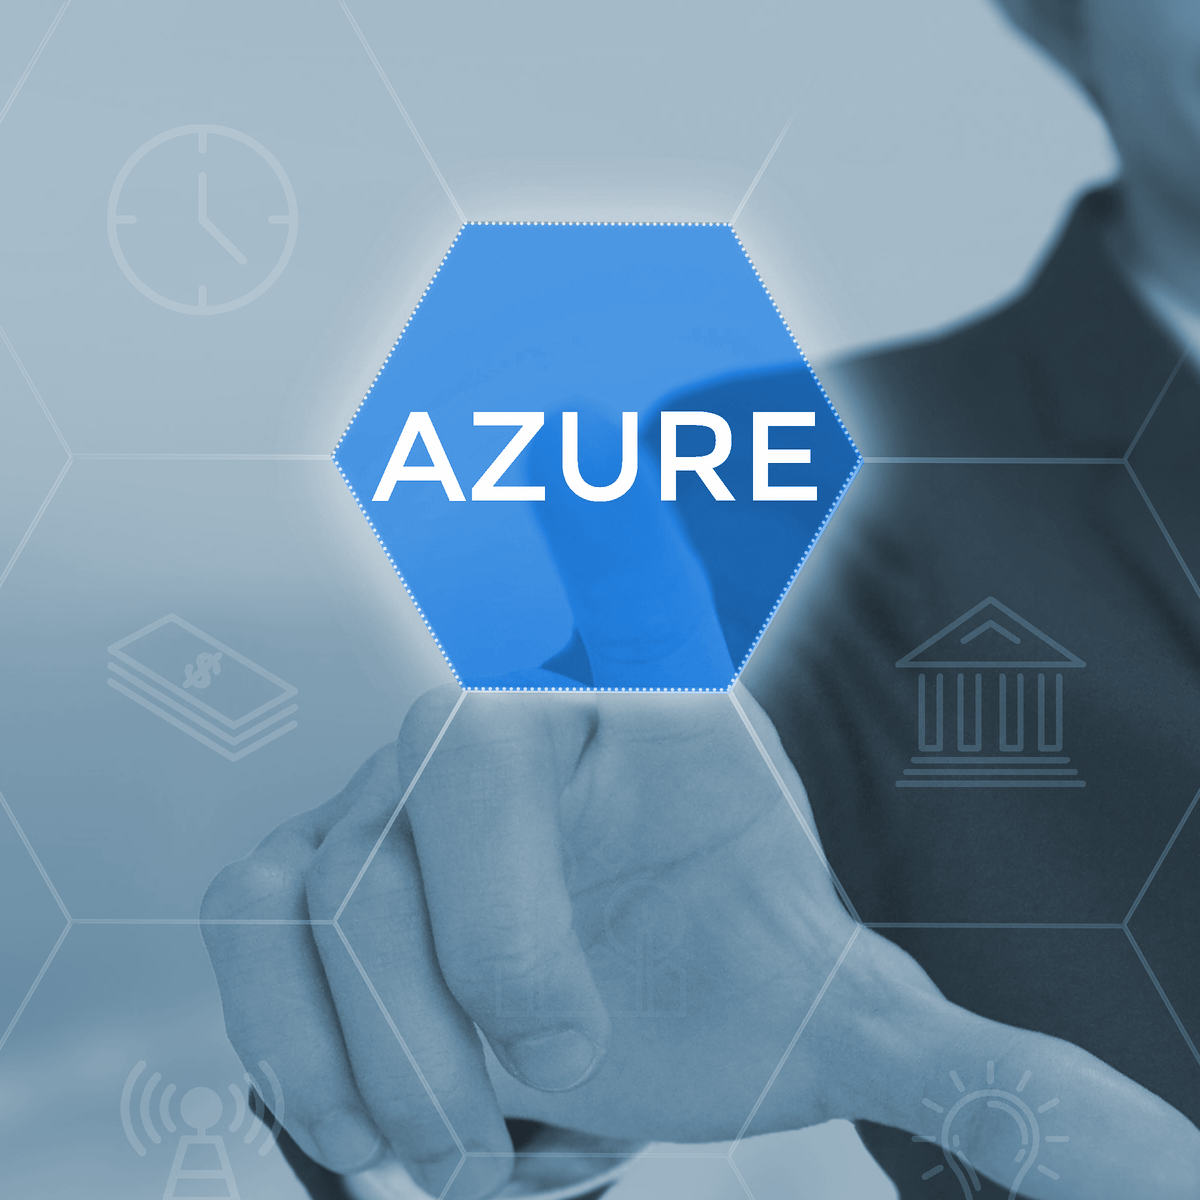 PCS developers dive deep into Azure at Microsoft event